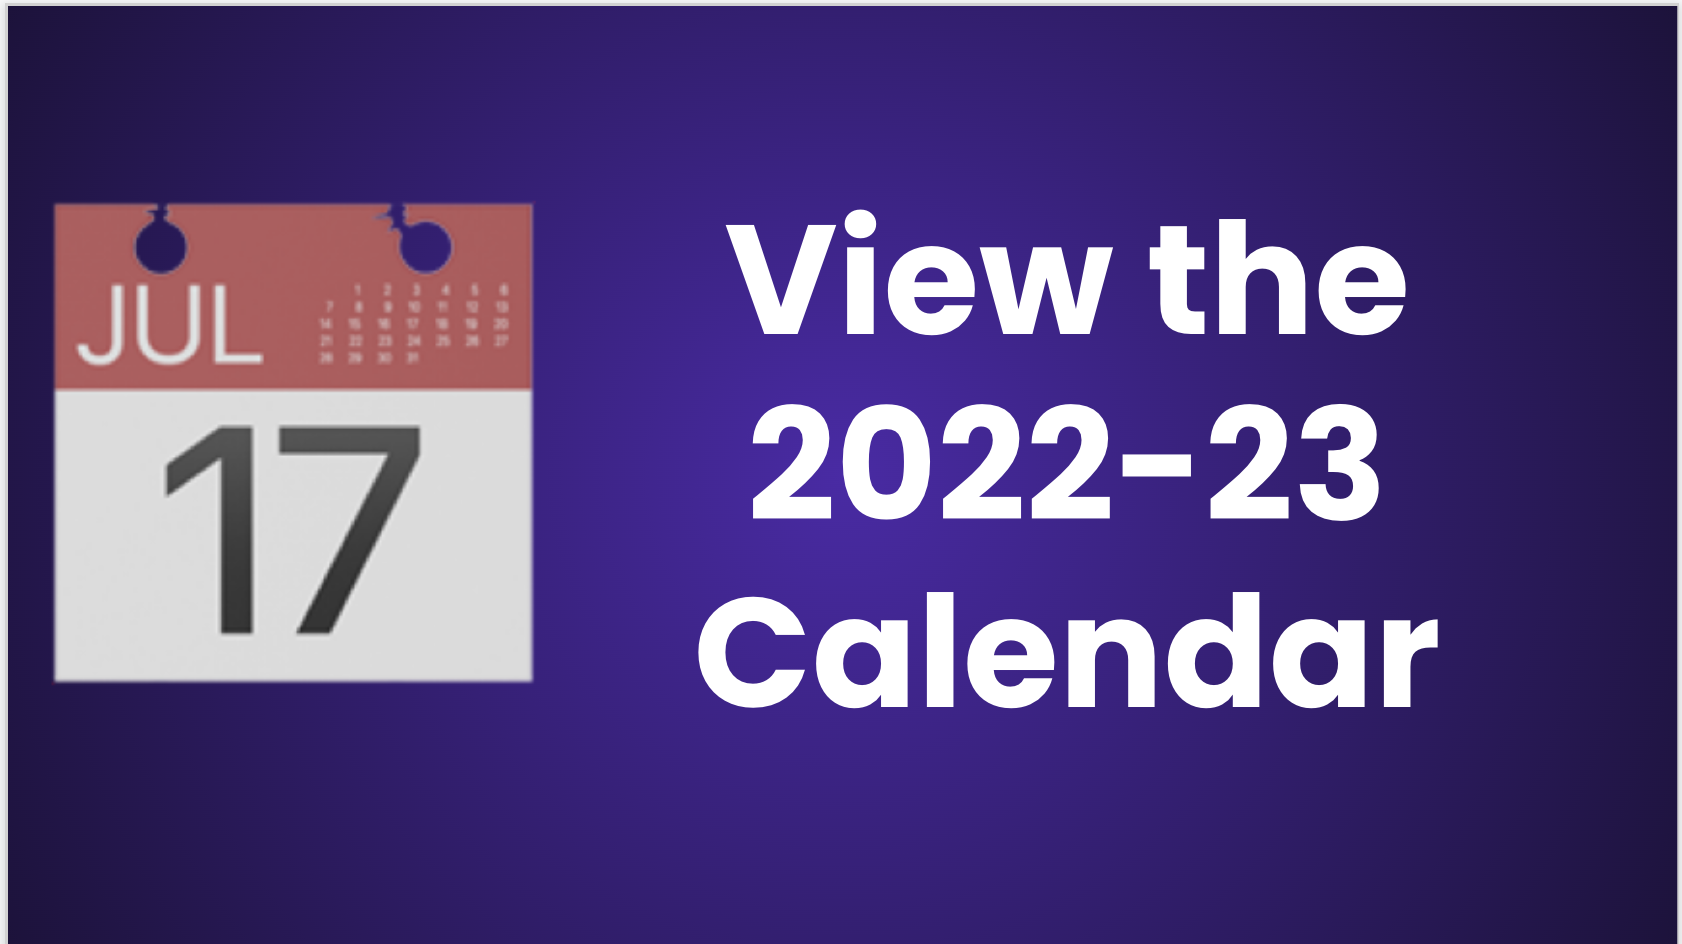 View the 2022-23 Calendar